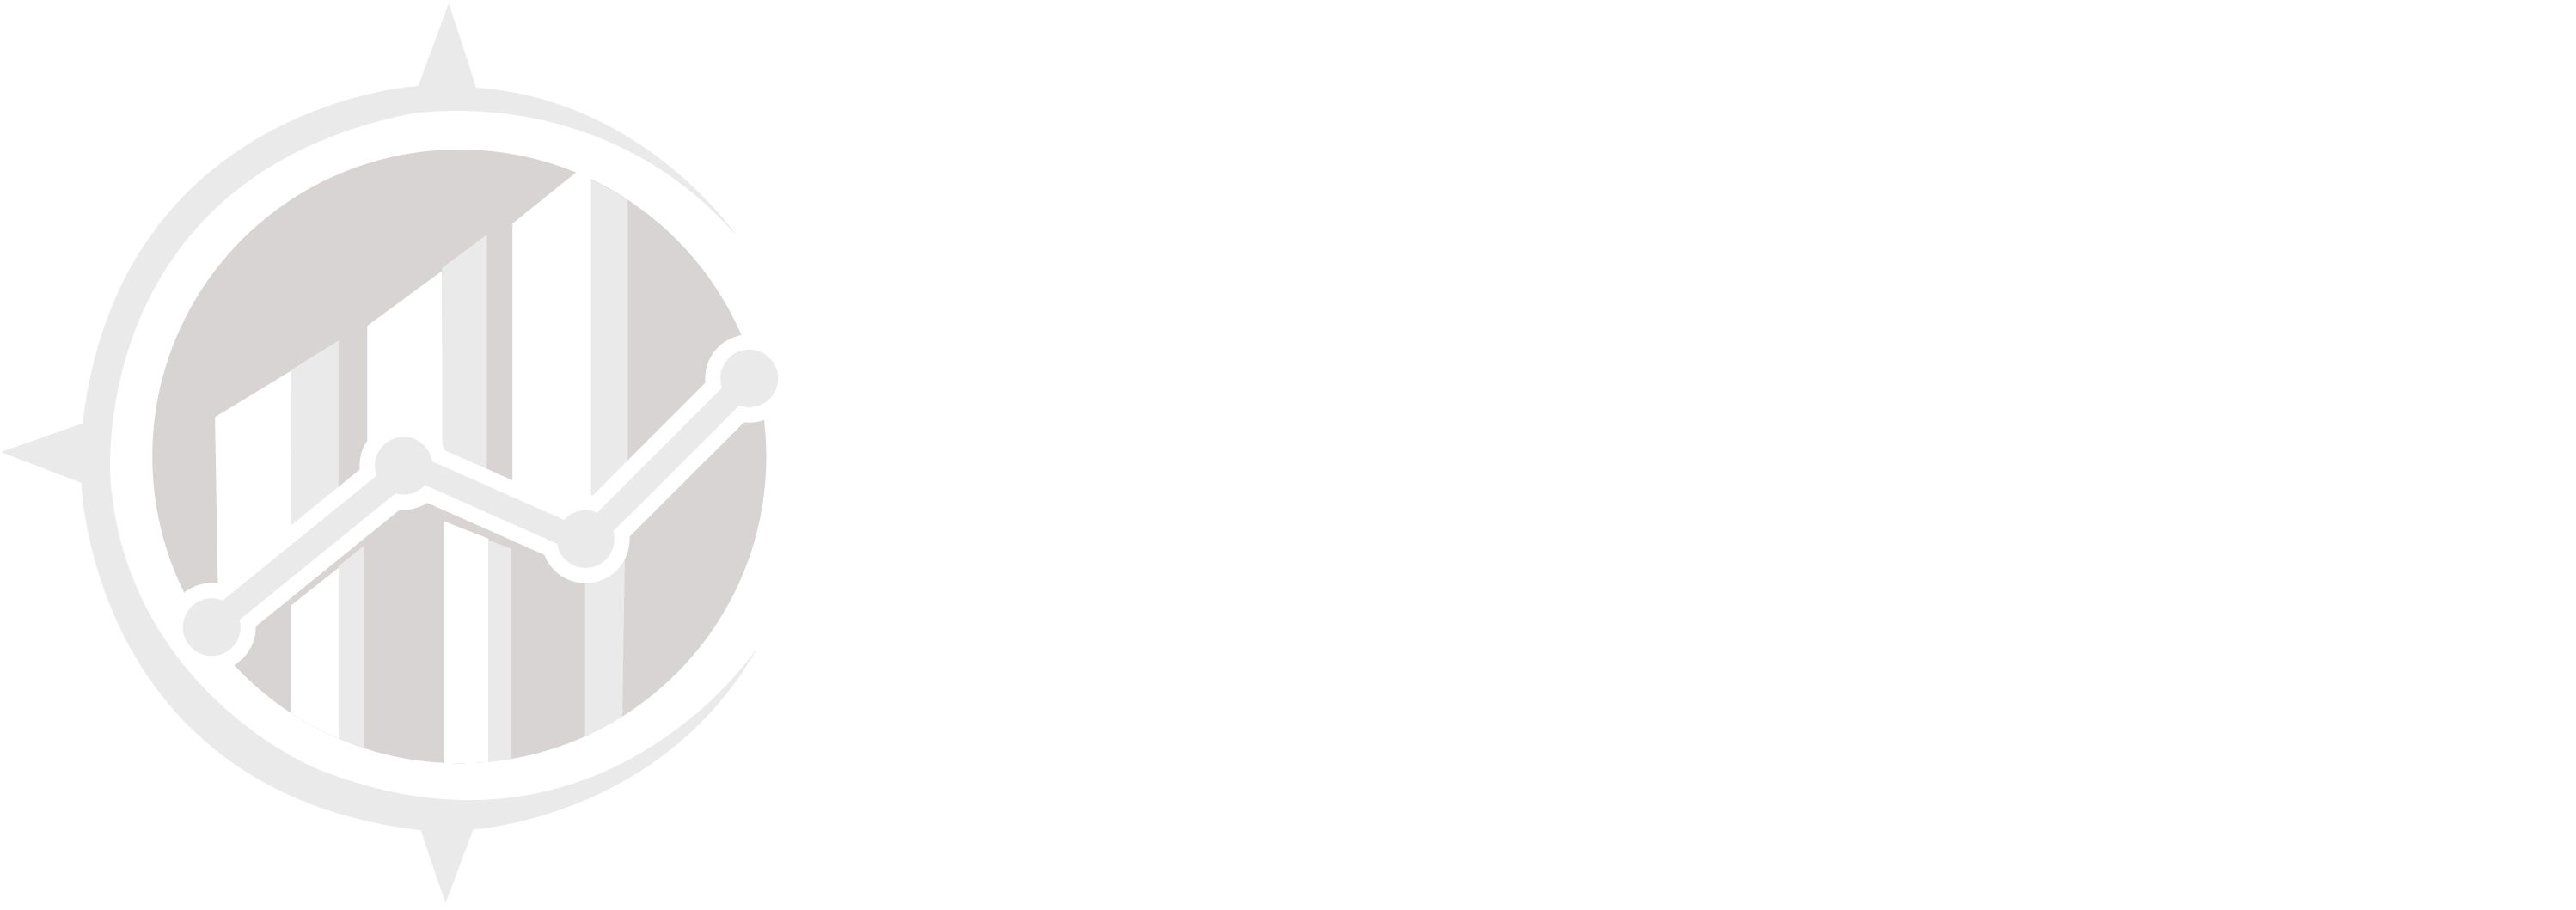 Highmark accountants & Consultants Logo White